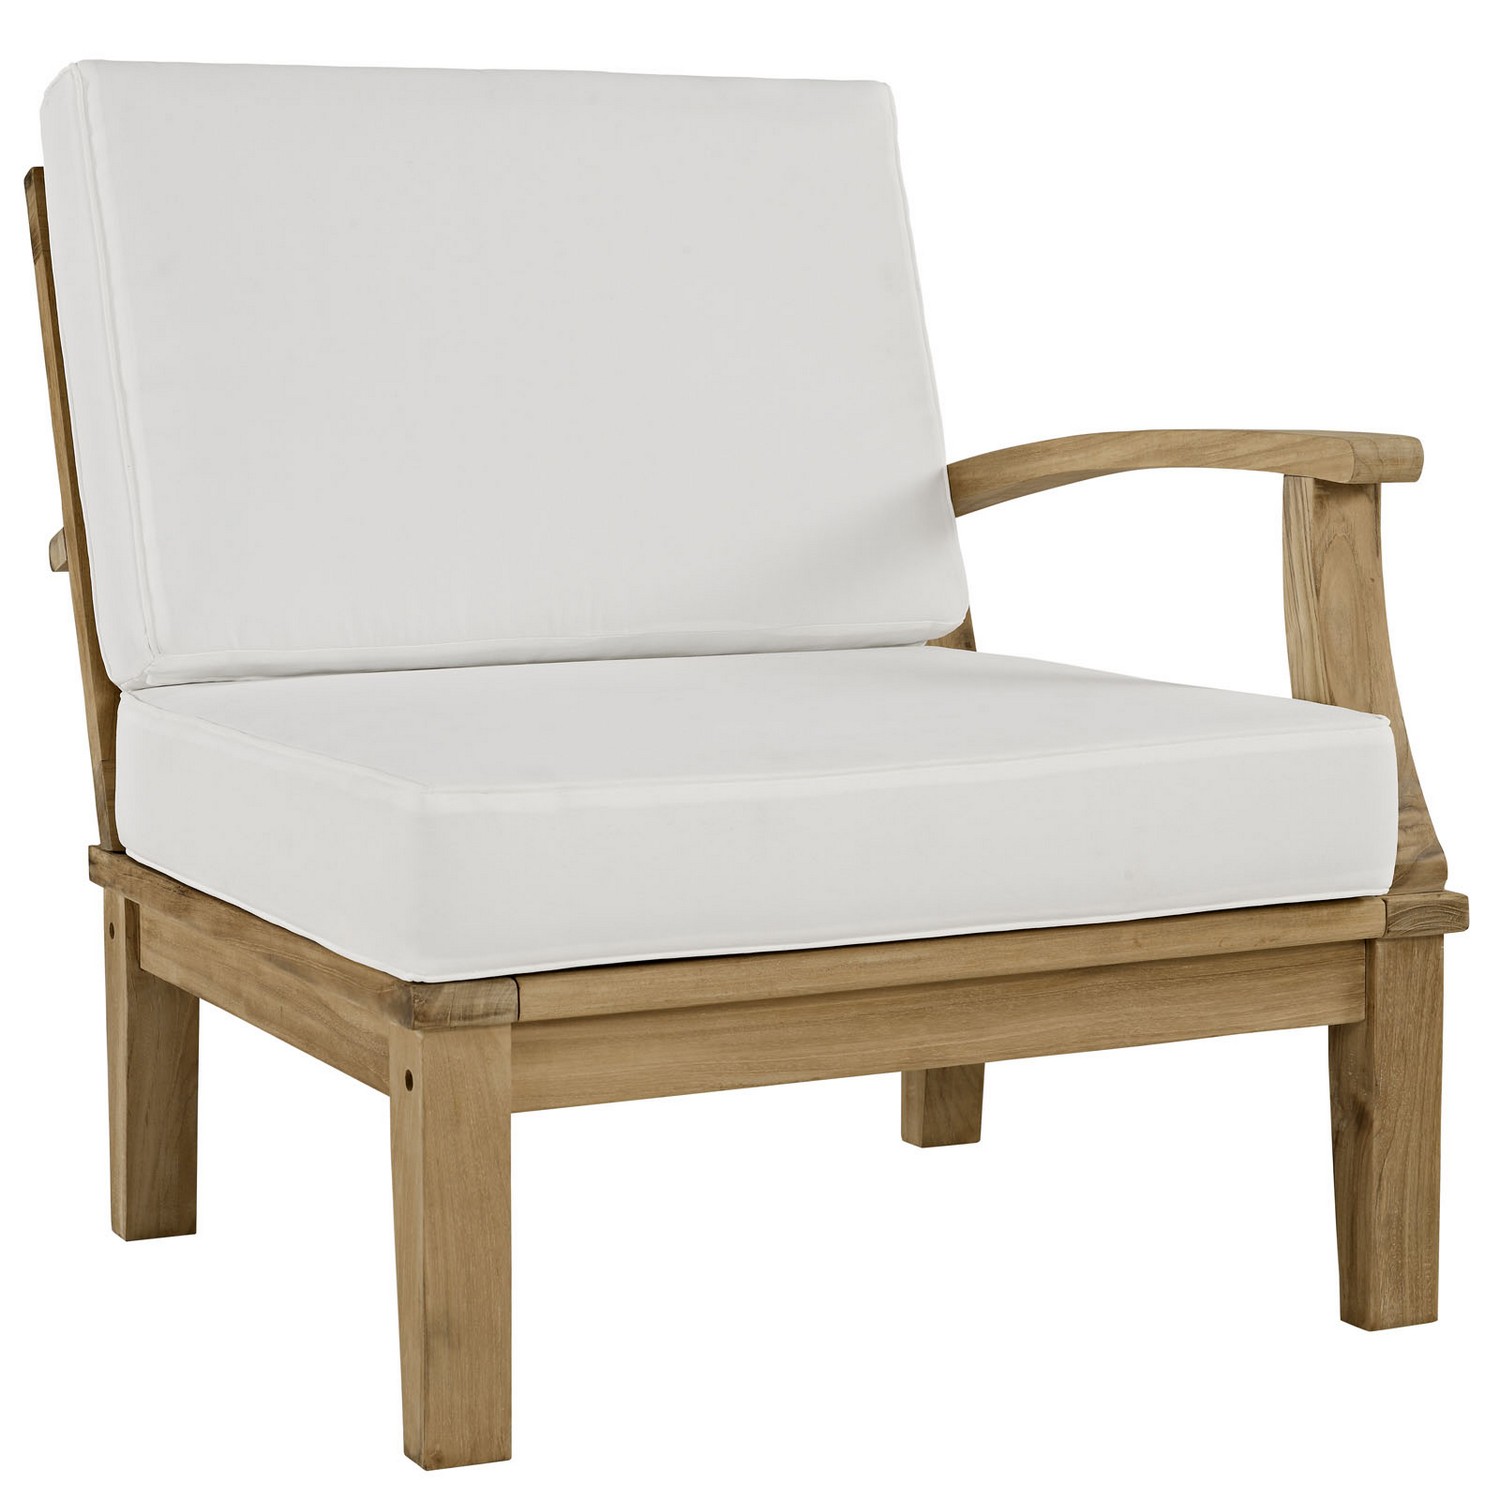 Modway Marina 6 Piece Outdoor Patio Teak Sofa Set - Natural White